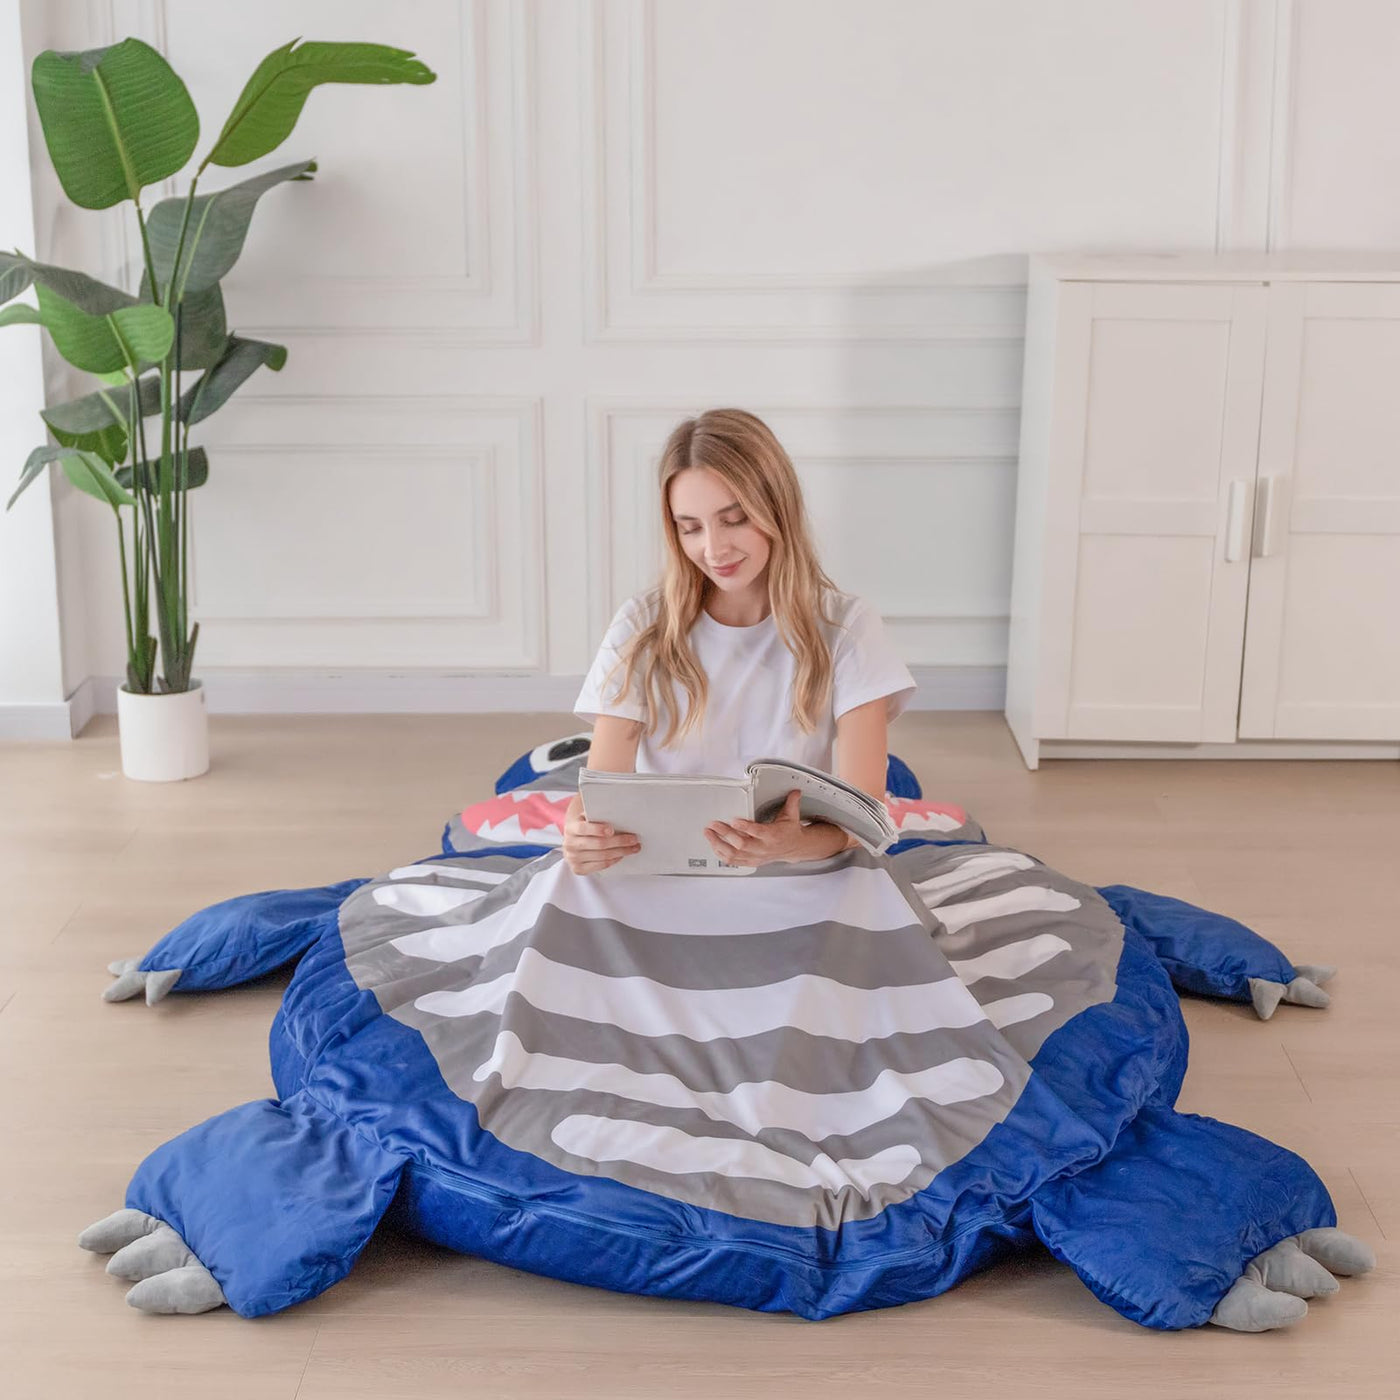 MAXYOYO Giant Cartoon Bean Bag Floor Bed, Plush Dinosaur Toy Bean Bag Gift